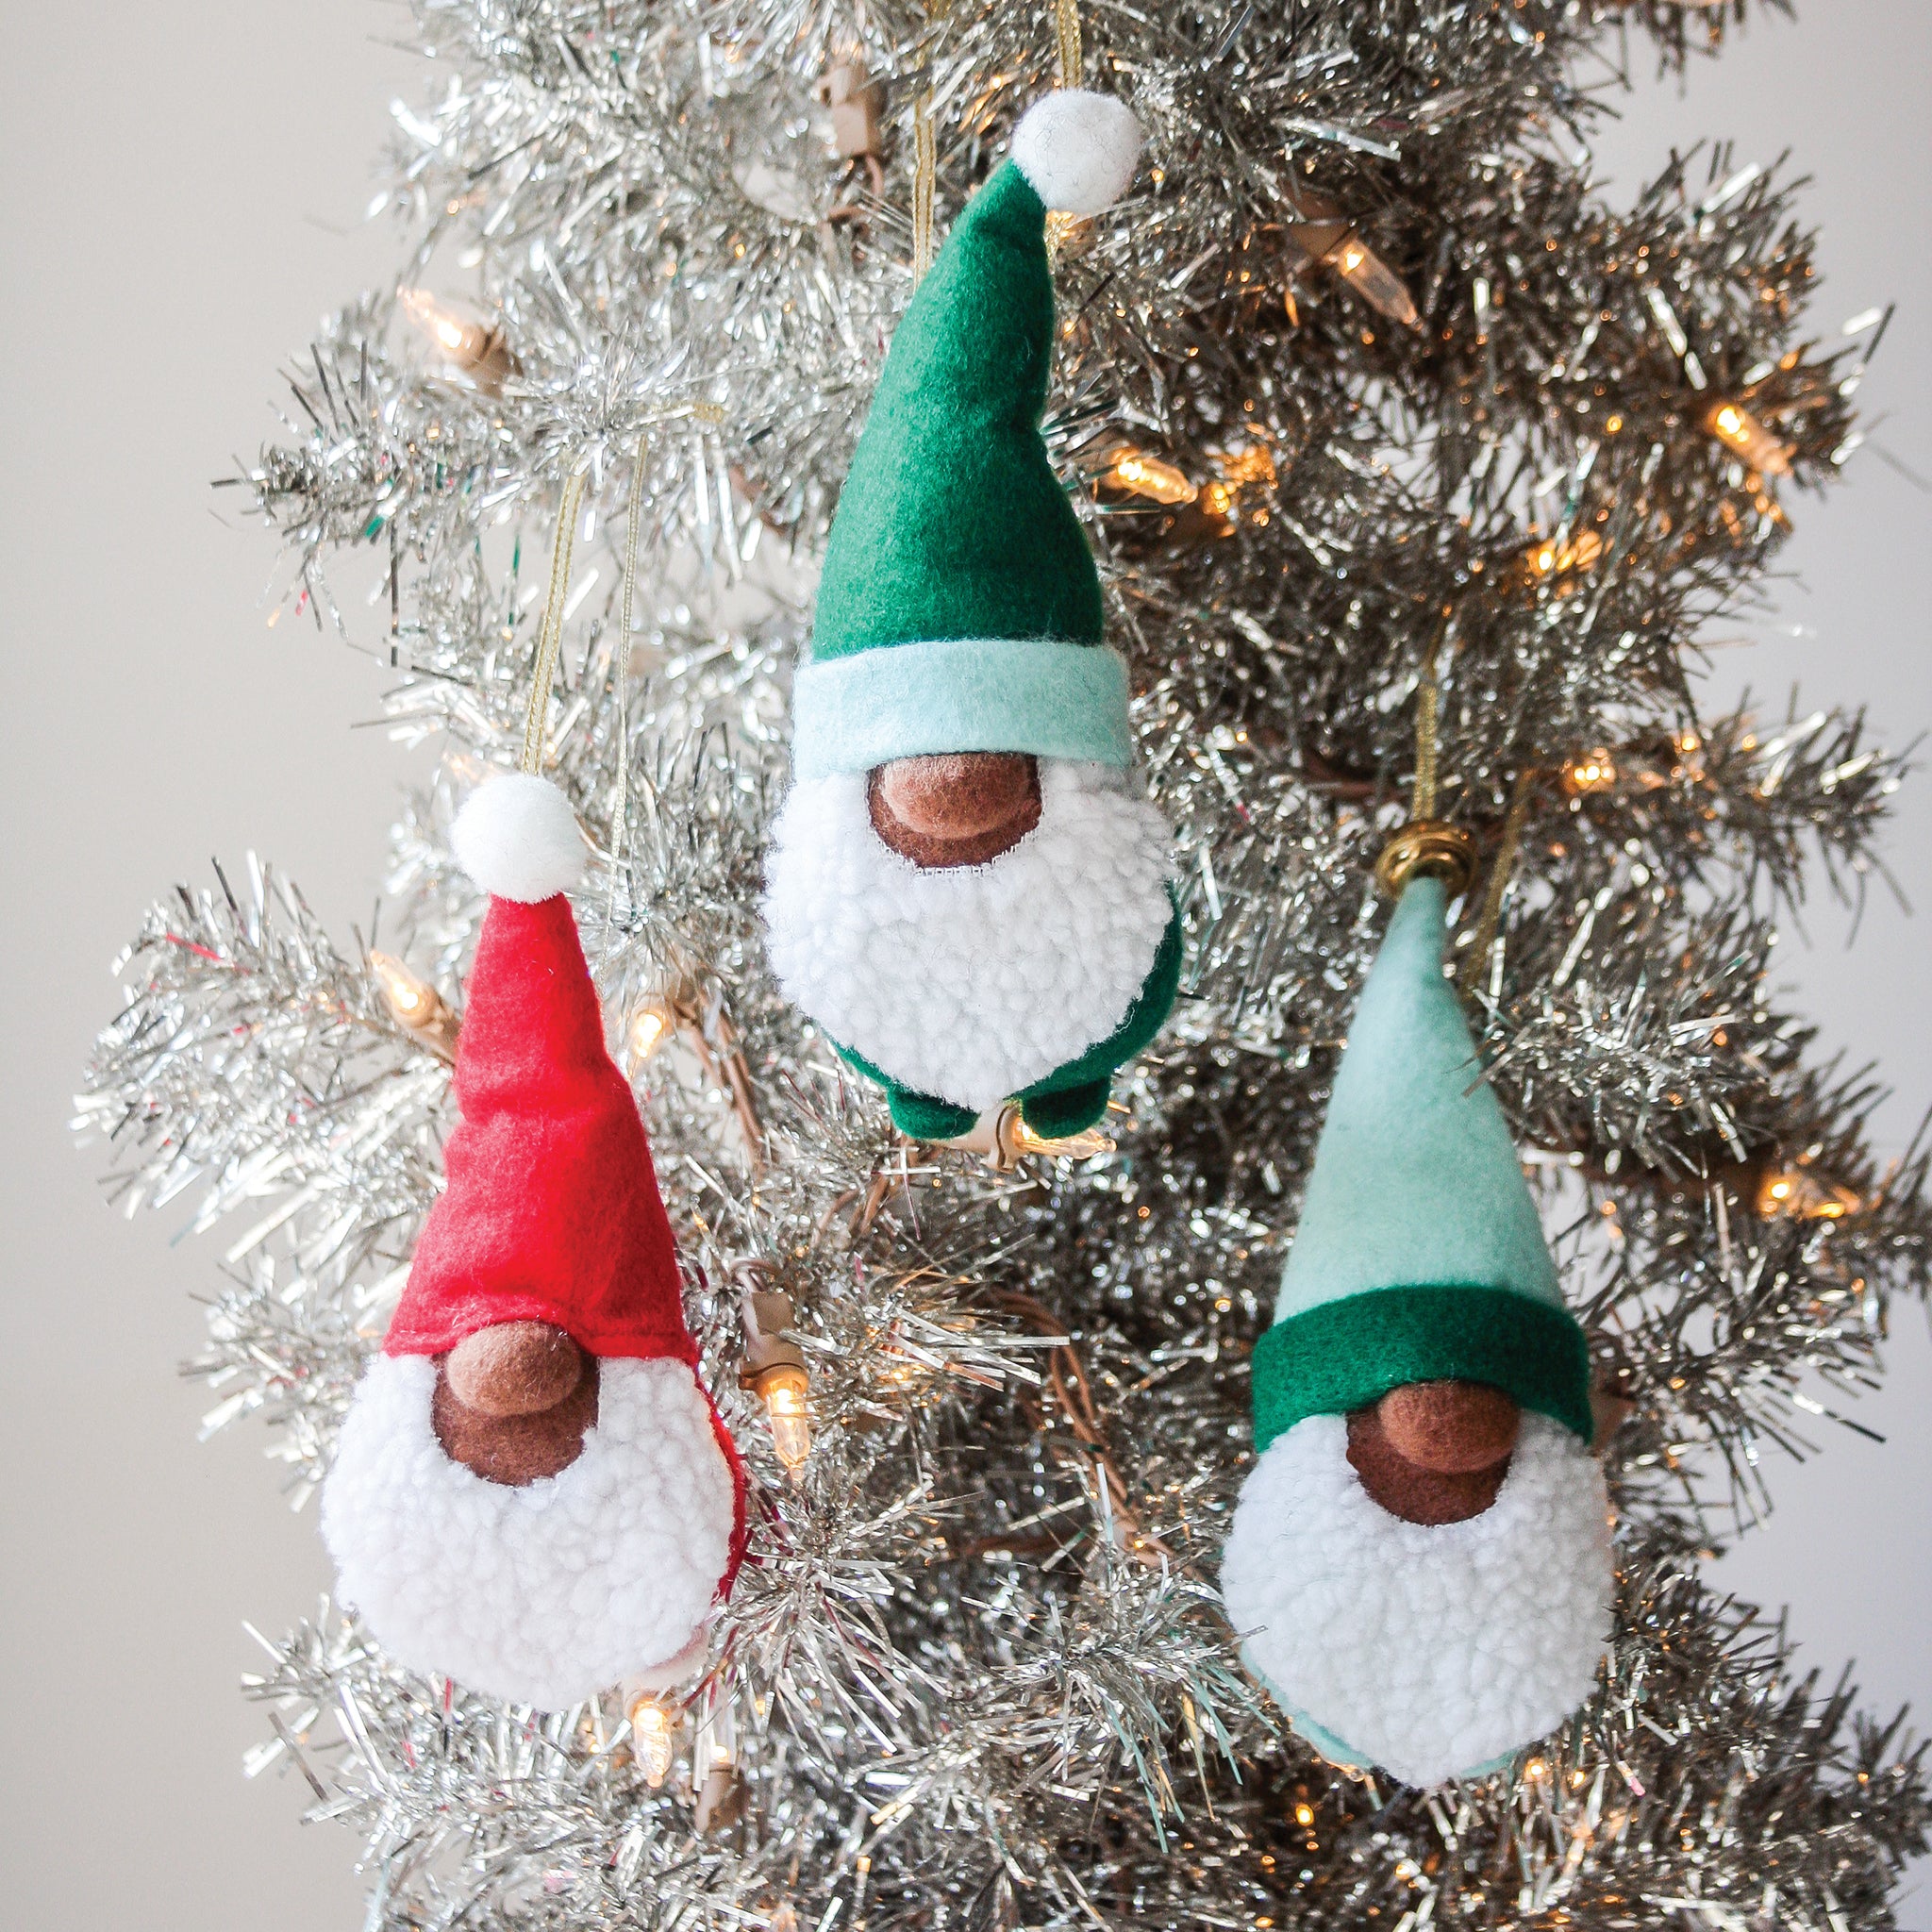 100 Pcs Black Christmas Ball Ornaments Christmas Tree Decoration Hangi –  Puppipop